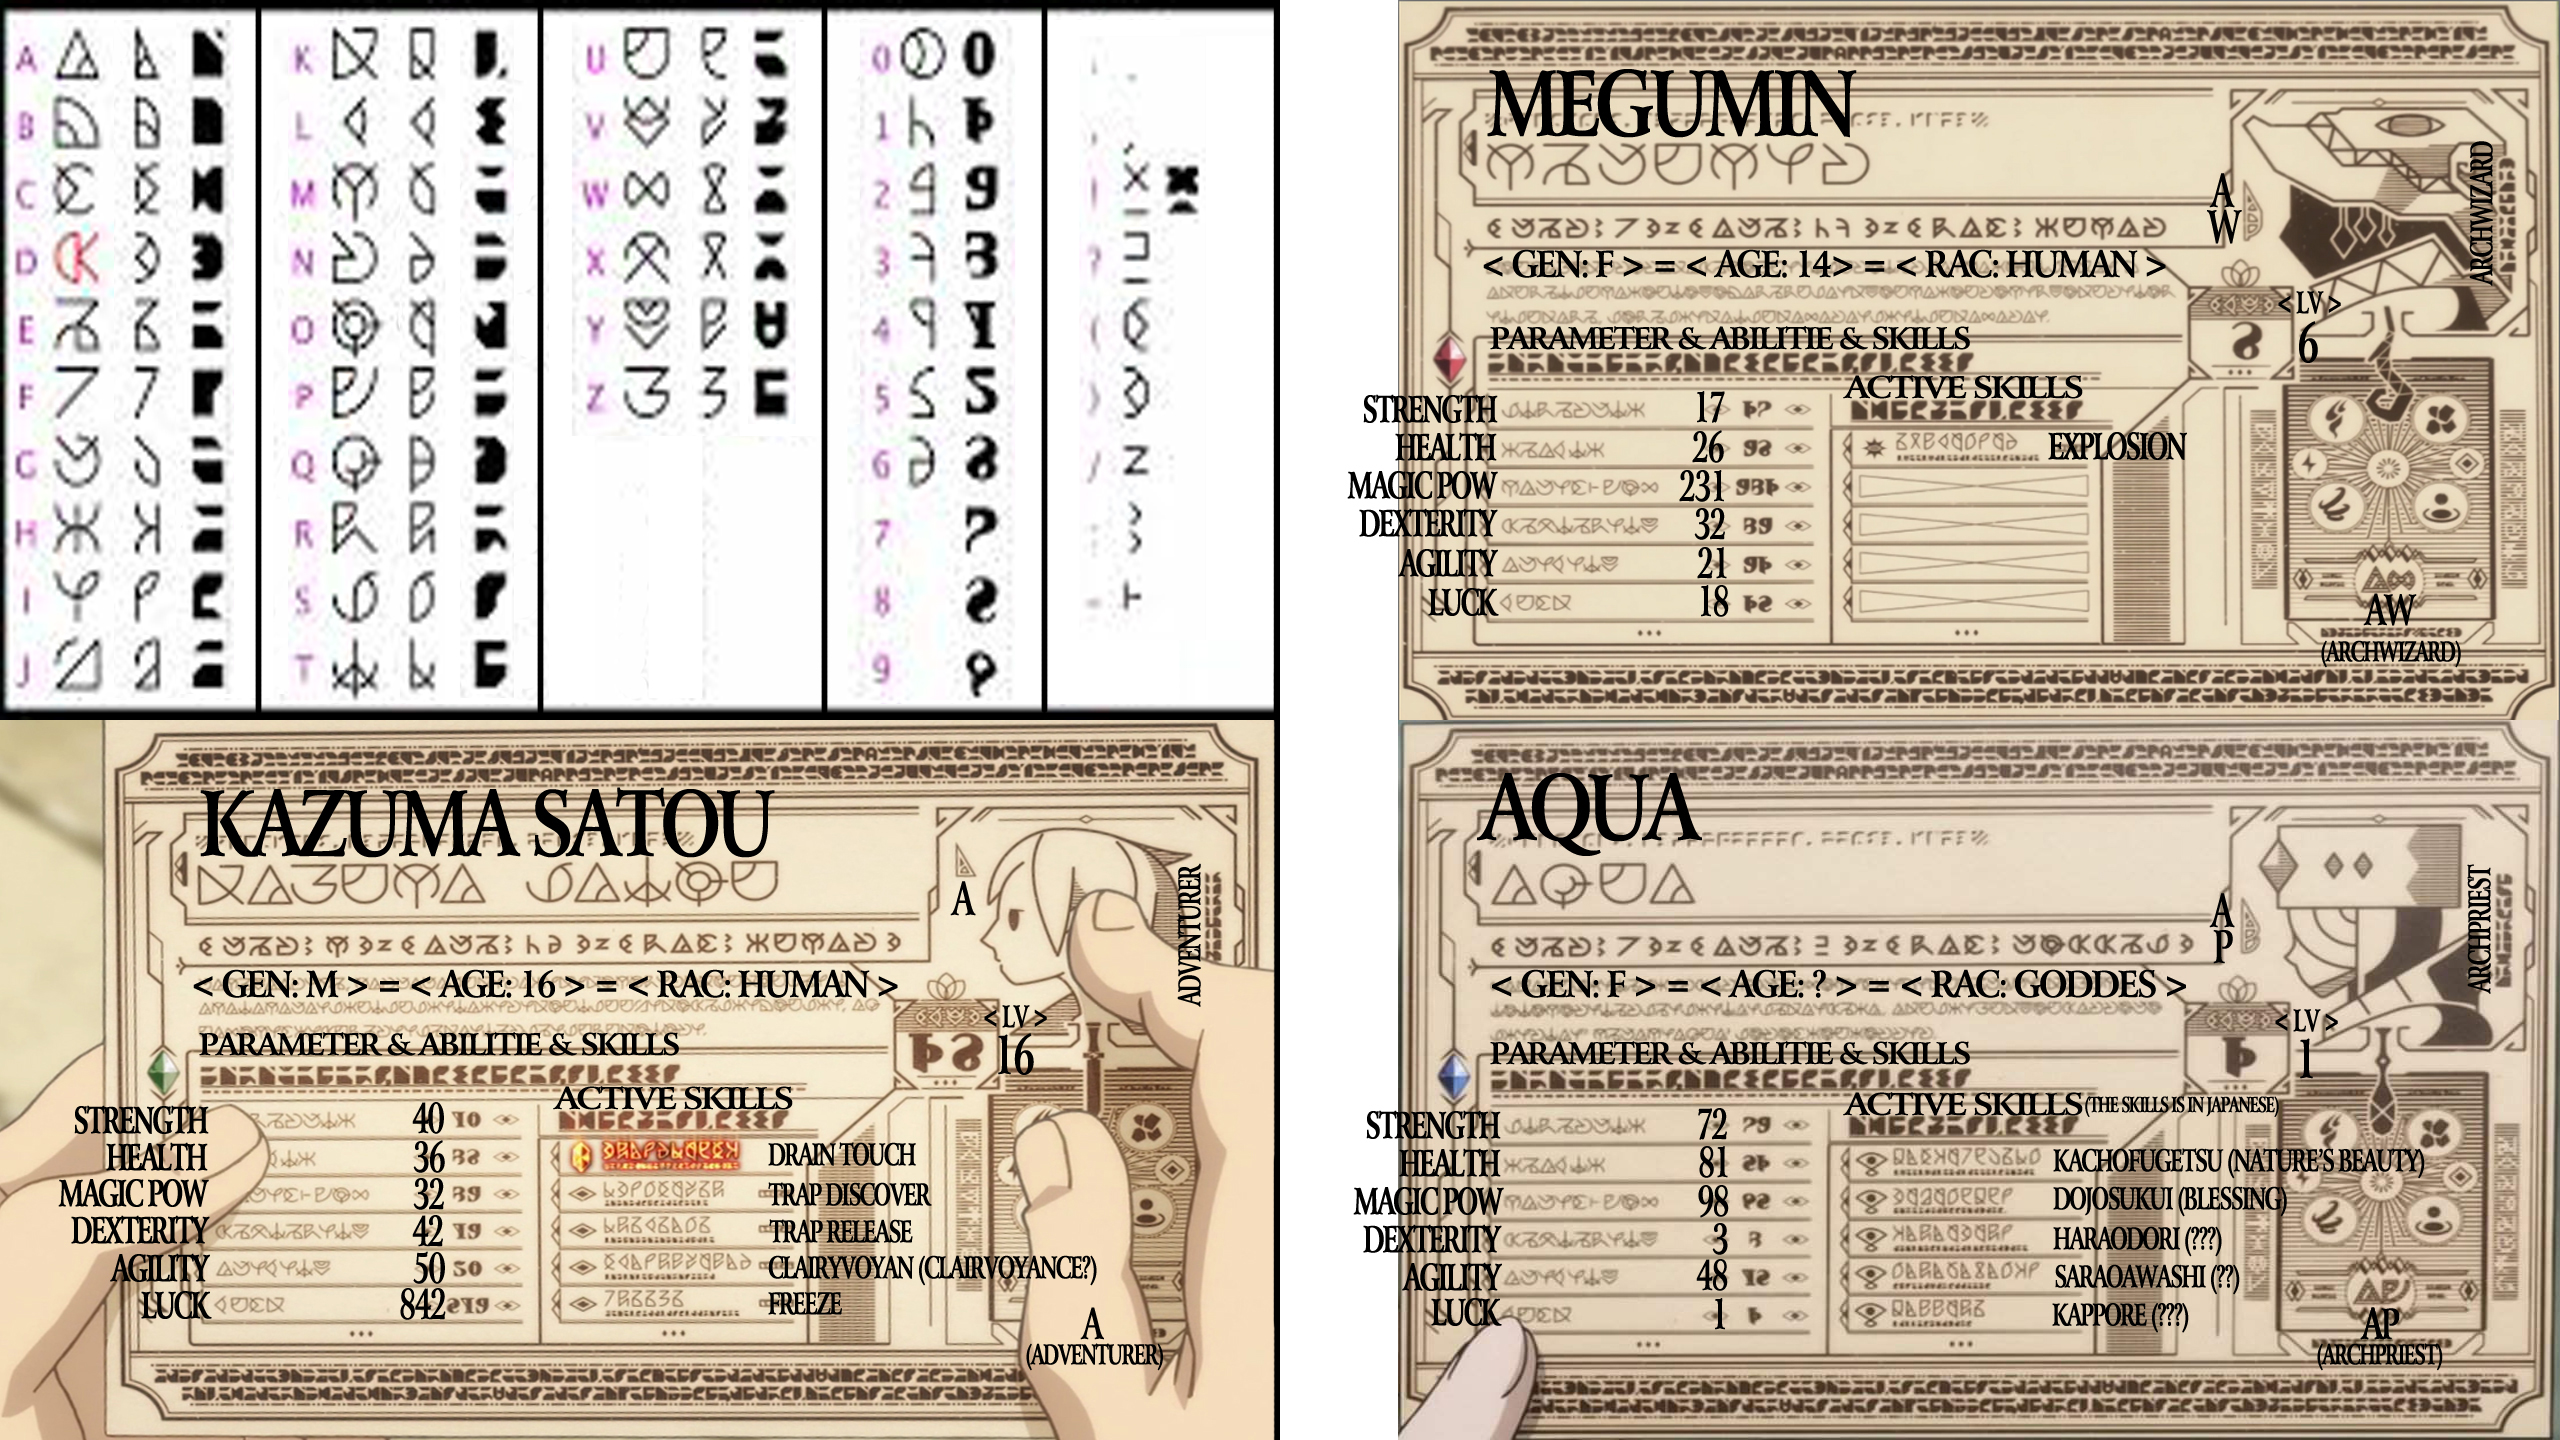 KonoSuba: Every Main Character's Age, Height, & Birthday